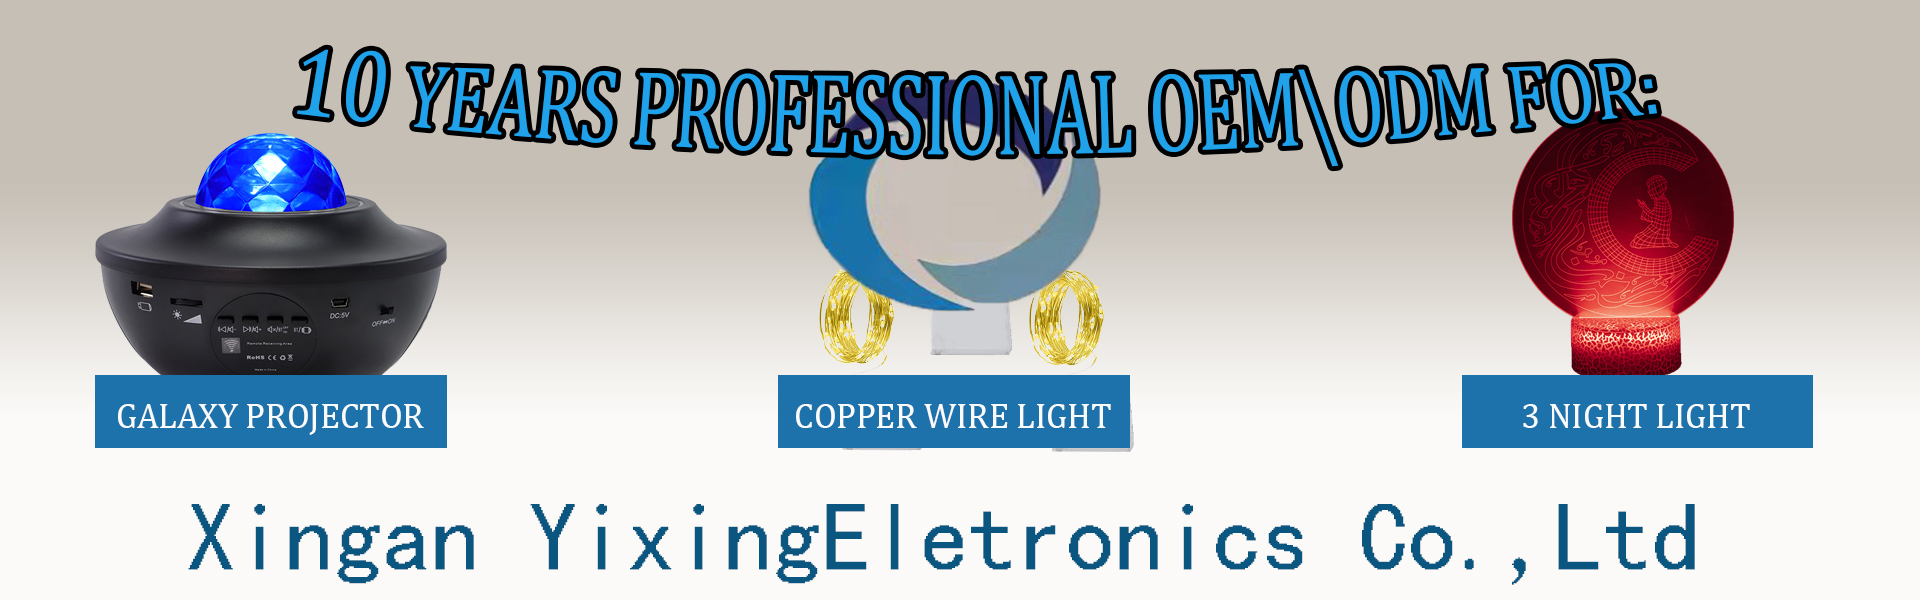 Cupru String Light, Proiector Starry, Lumină denoapte 3D,Xingan Xian Yixing Electronics Co., Ltd.